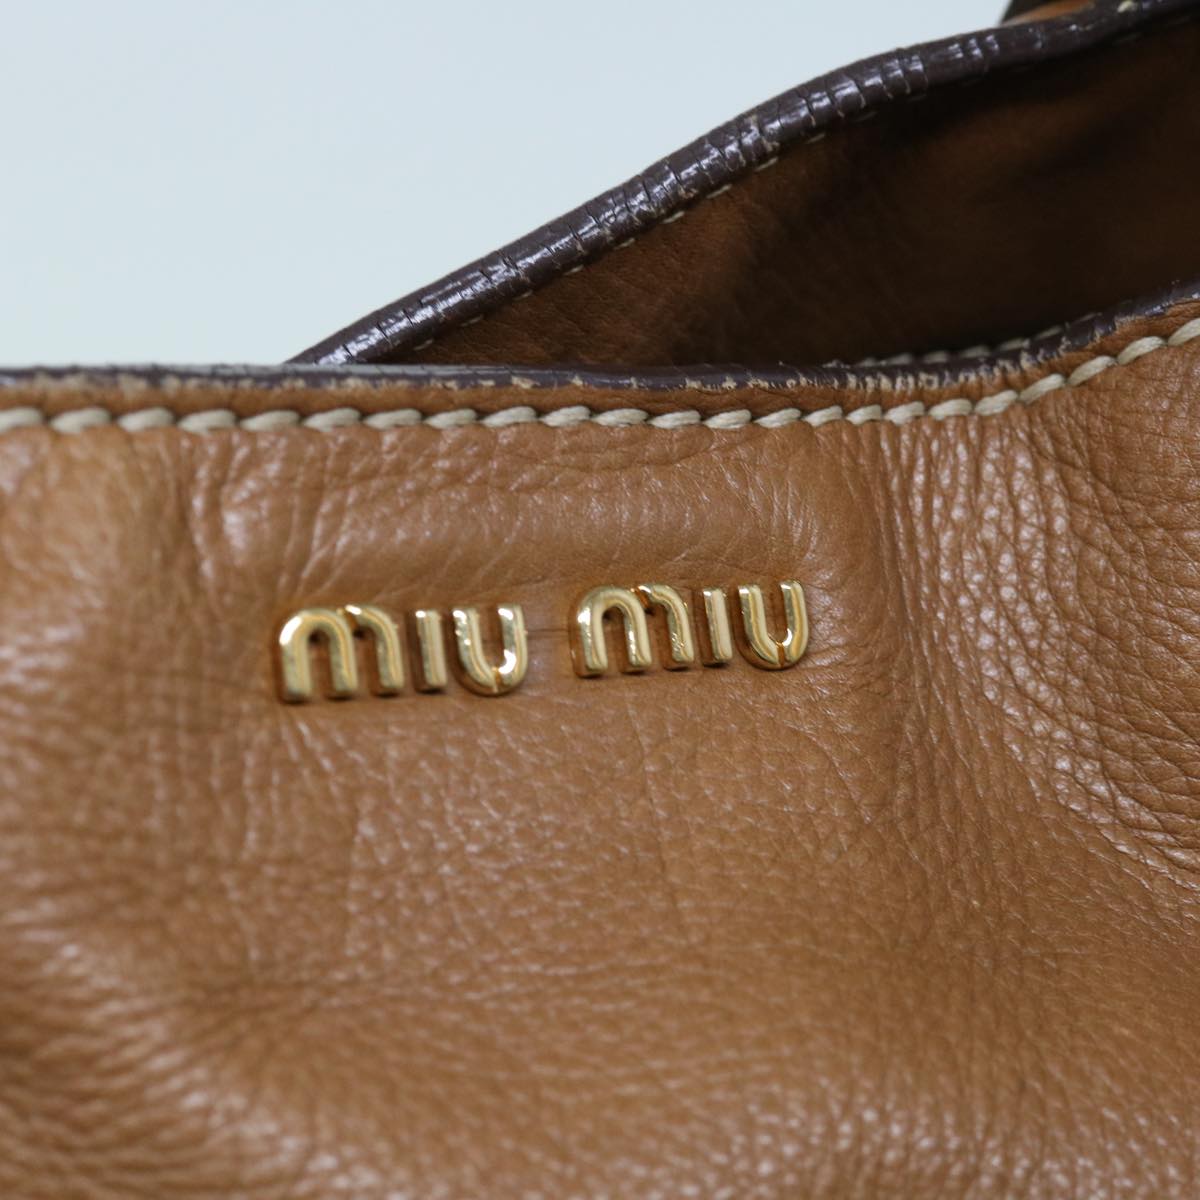 Miu Miu Hand Bag Leather Brown Auth yk10280